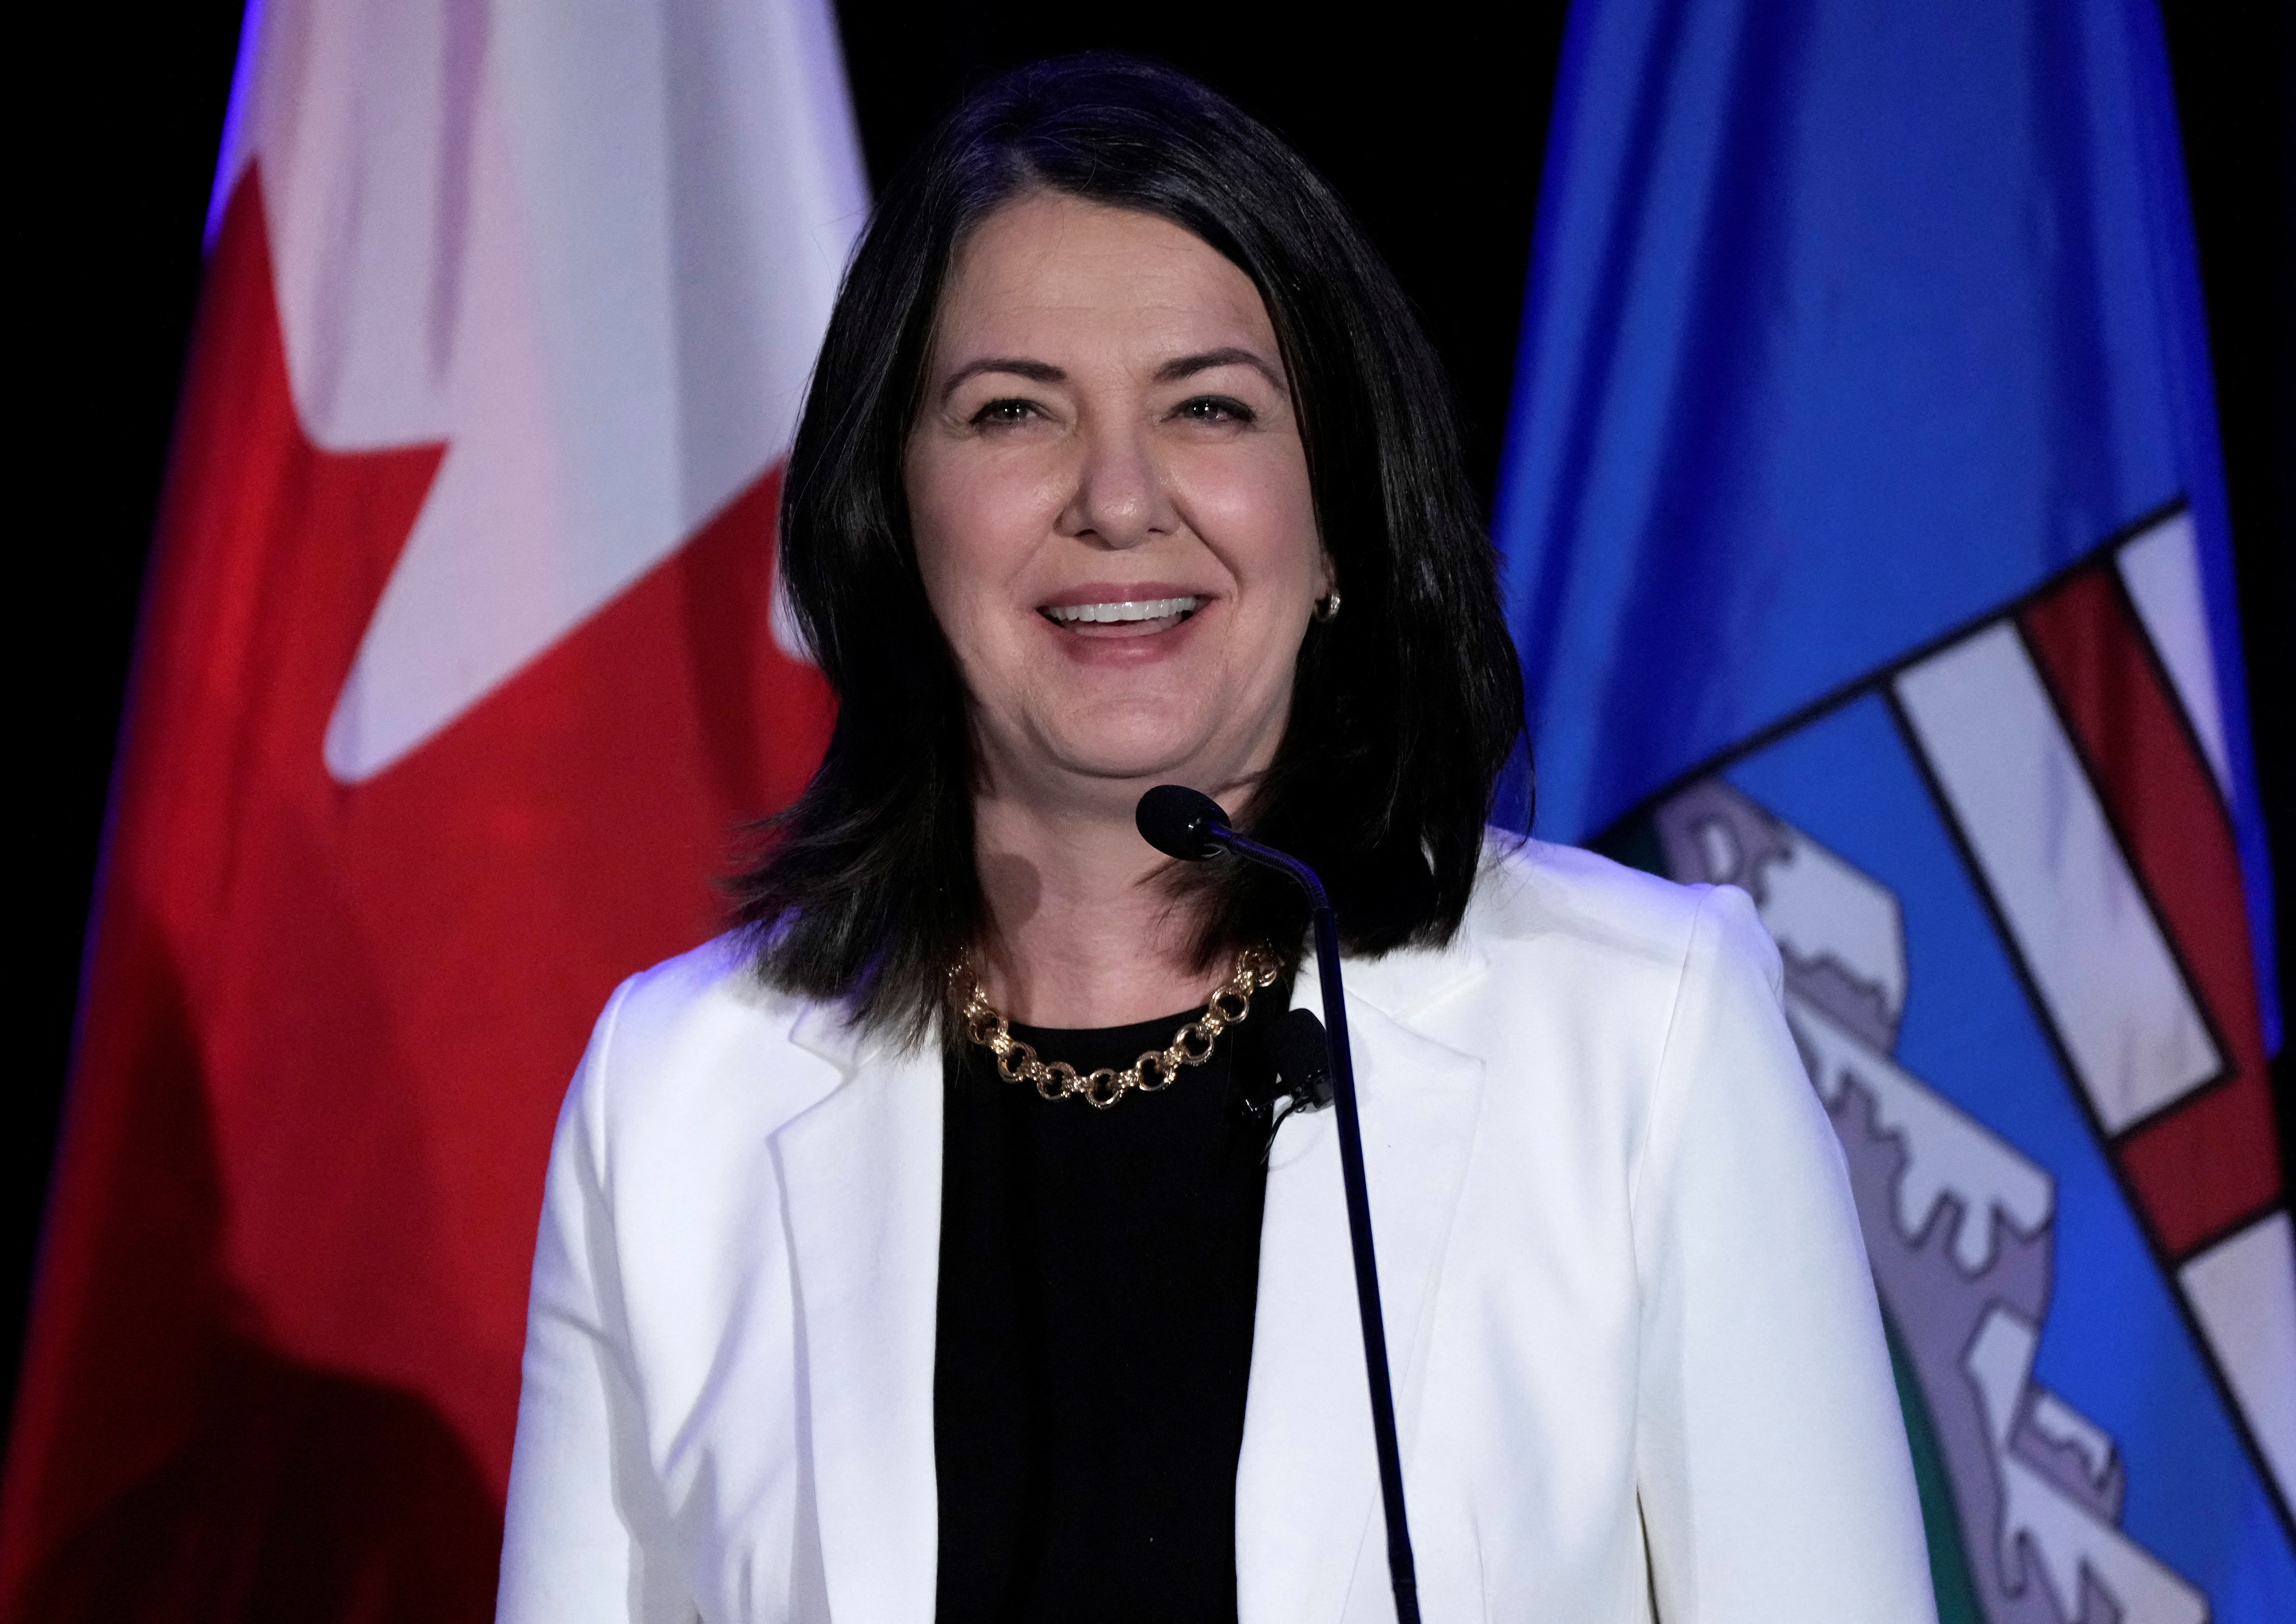 Alberta Premier Danielle Smith speaks at the Calgary Chamber of Commerce